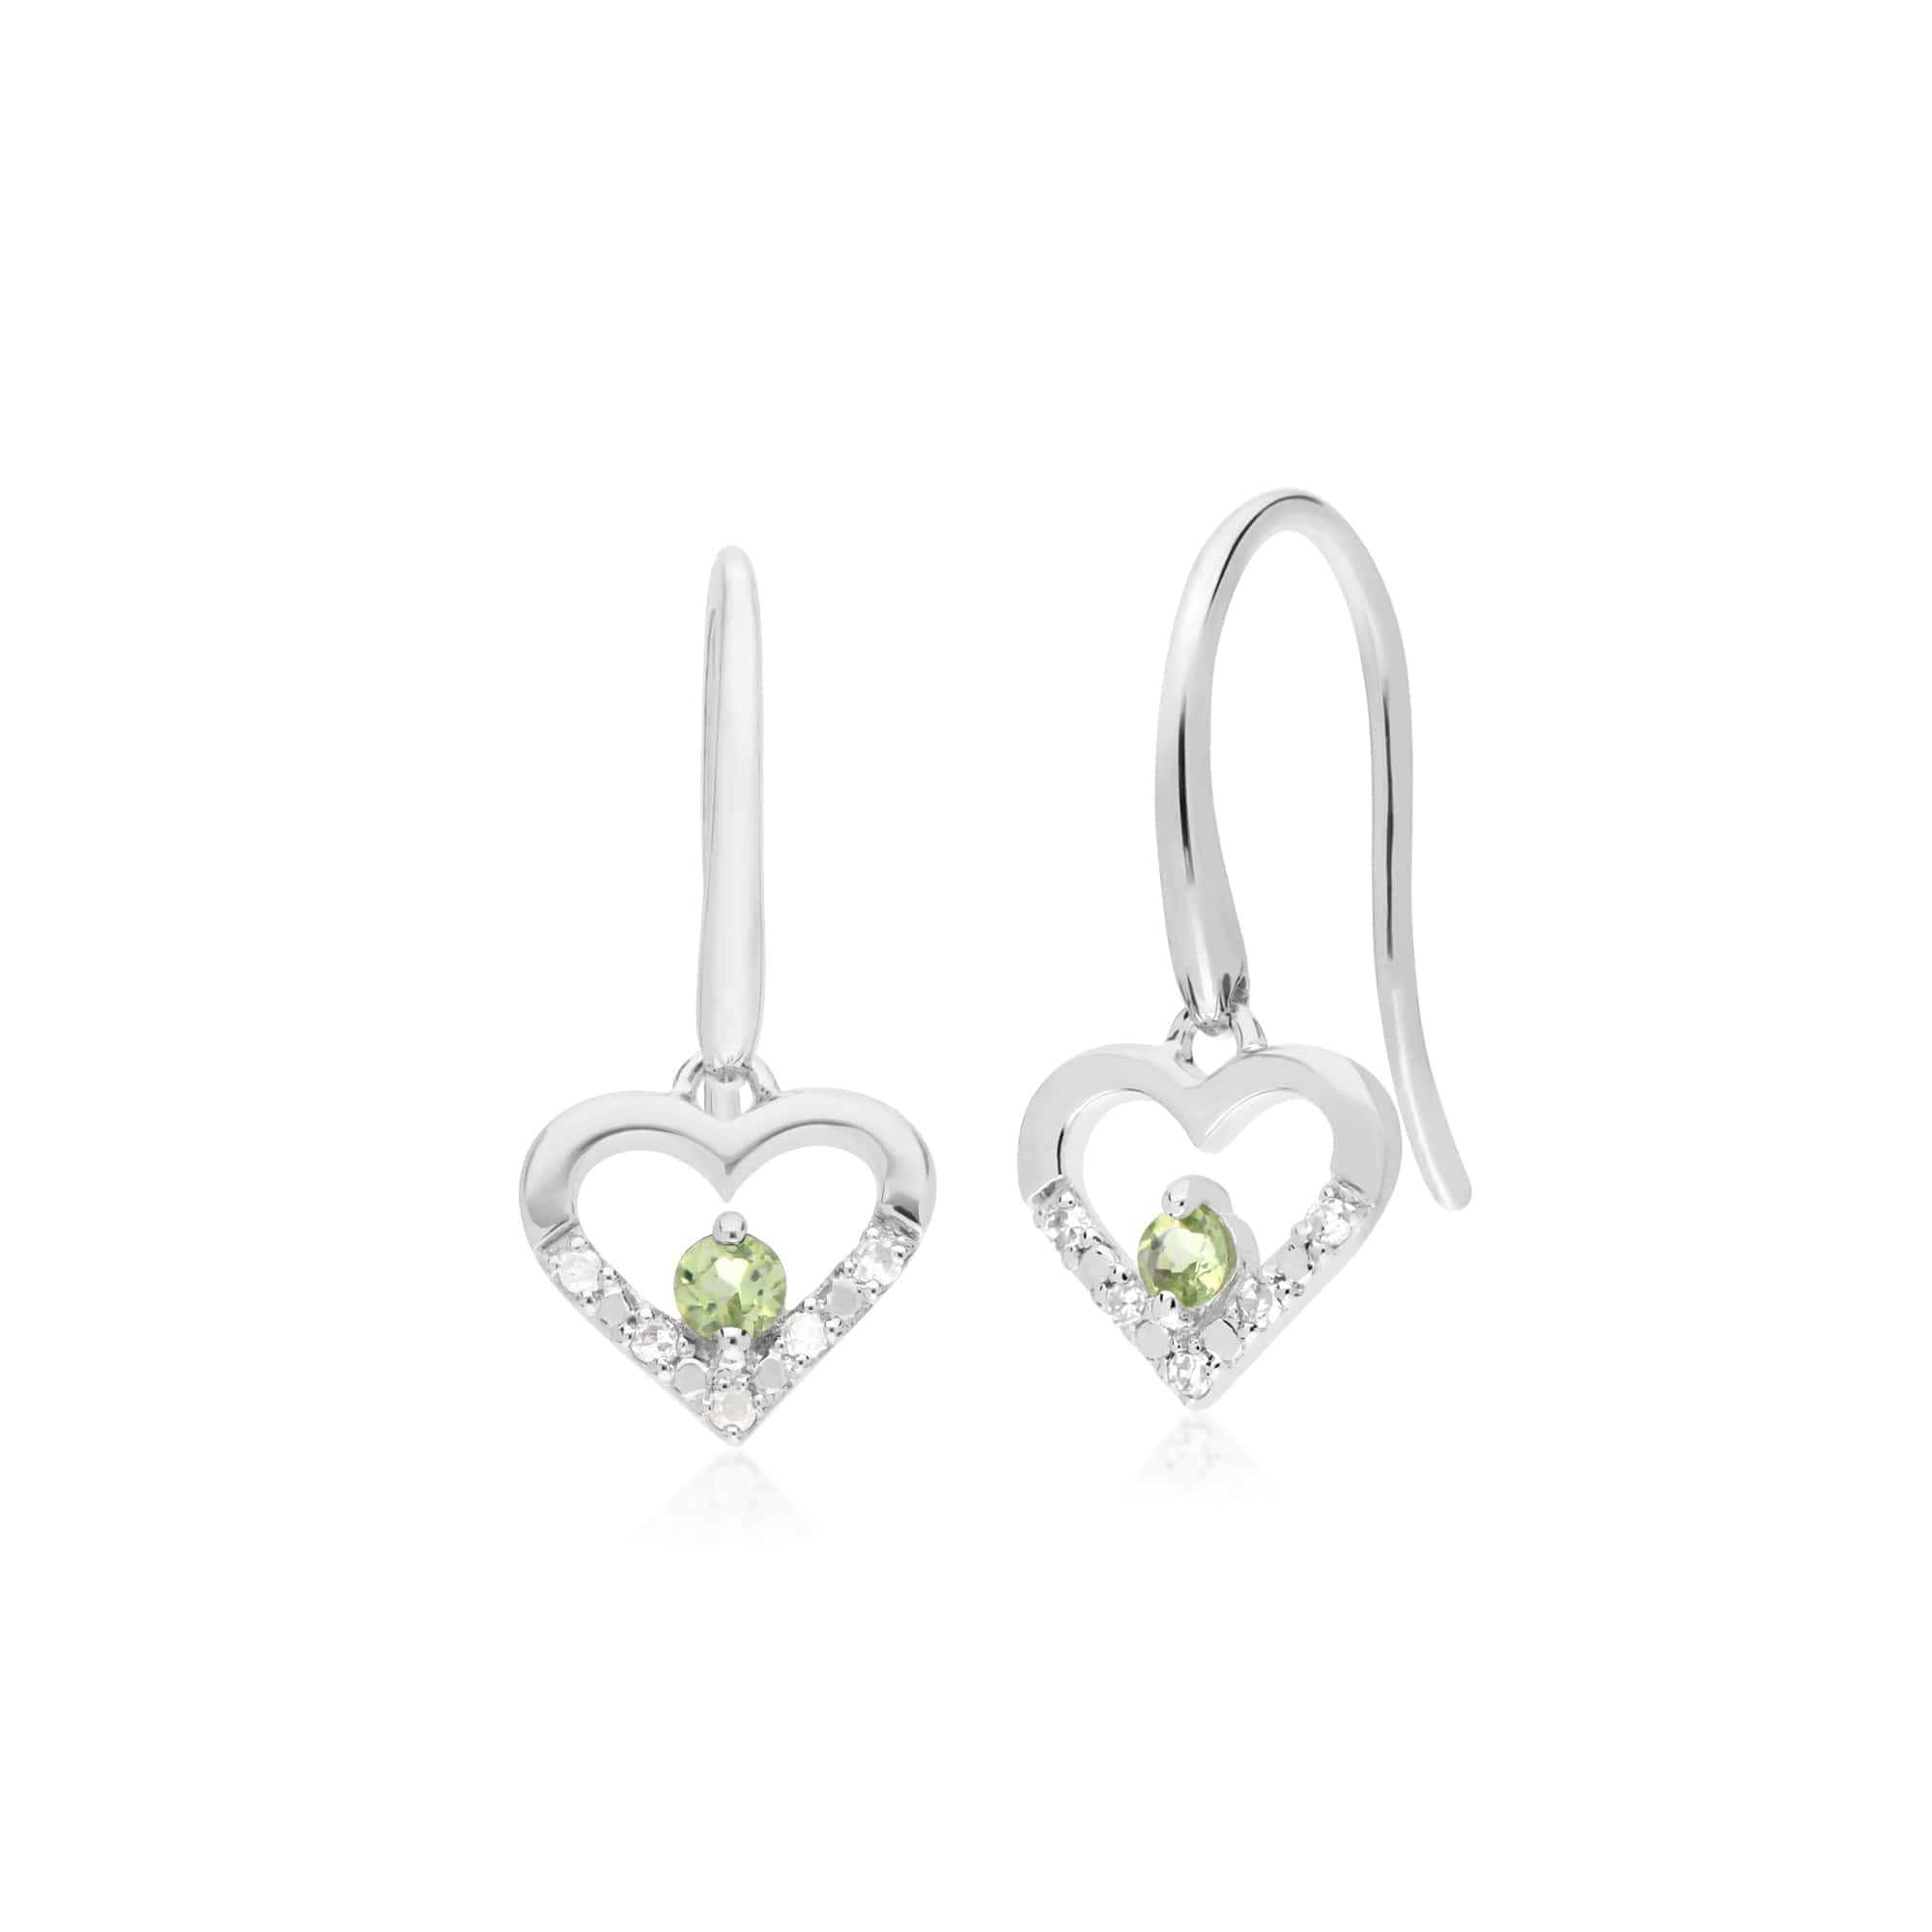 162E0258089-162P0219089 Classic Round Peridot & Diamond Heart Drop Earrings & Pendant Set in 9ct White Gold 2